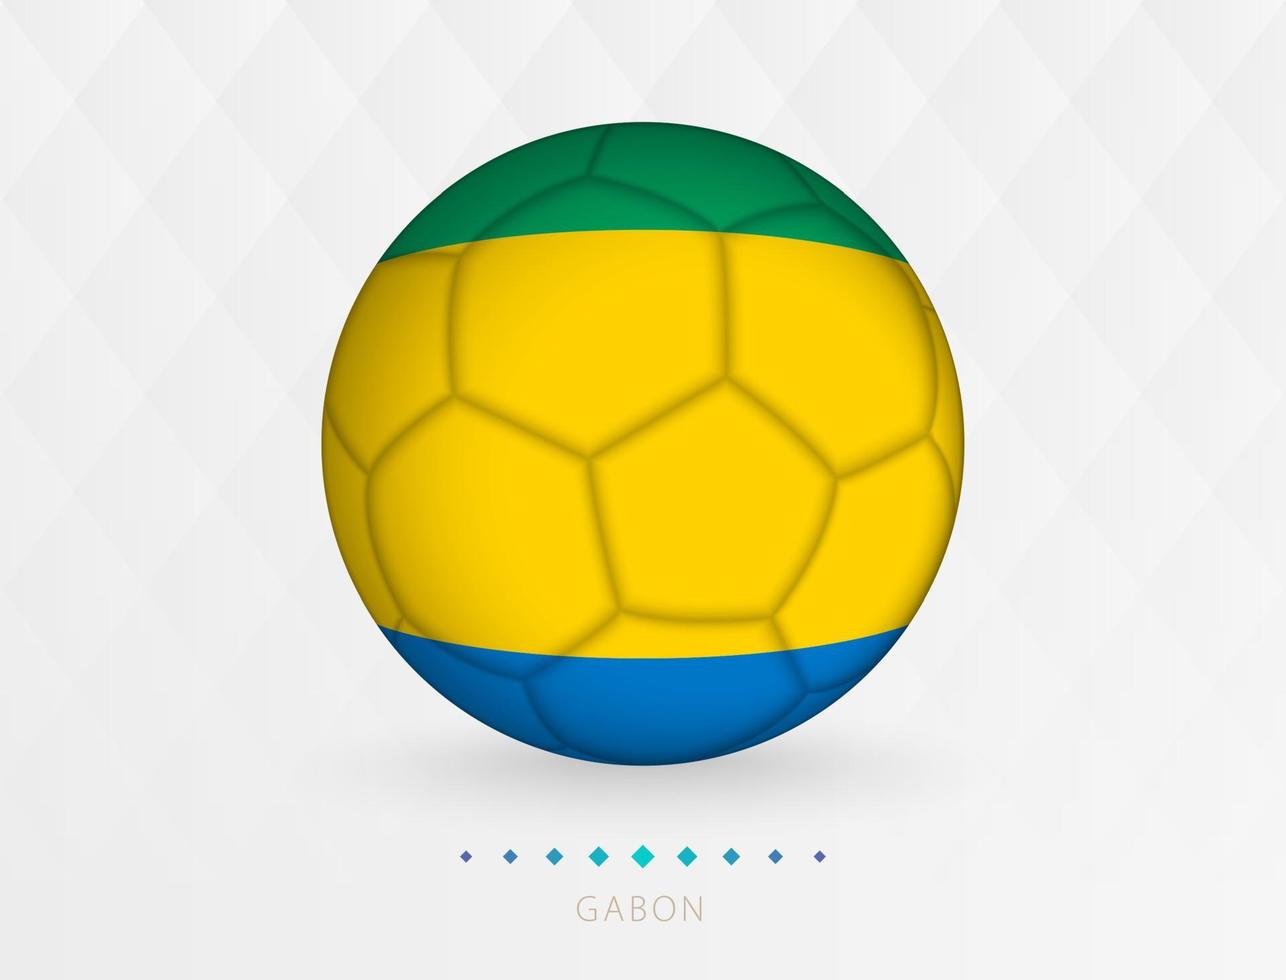 Football ball with Gabon flag pattern, soccer ball with flag of Gabon national team. vector